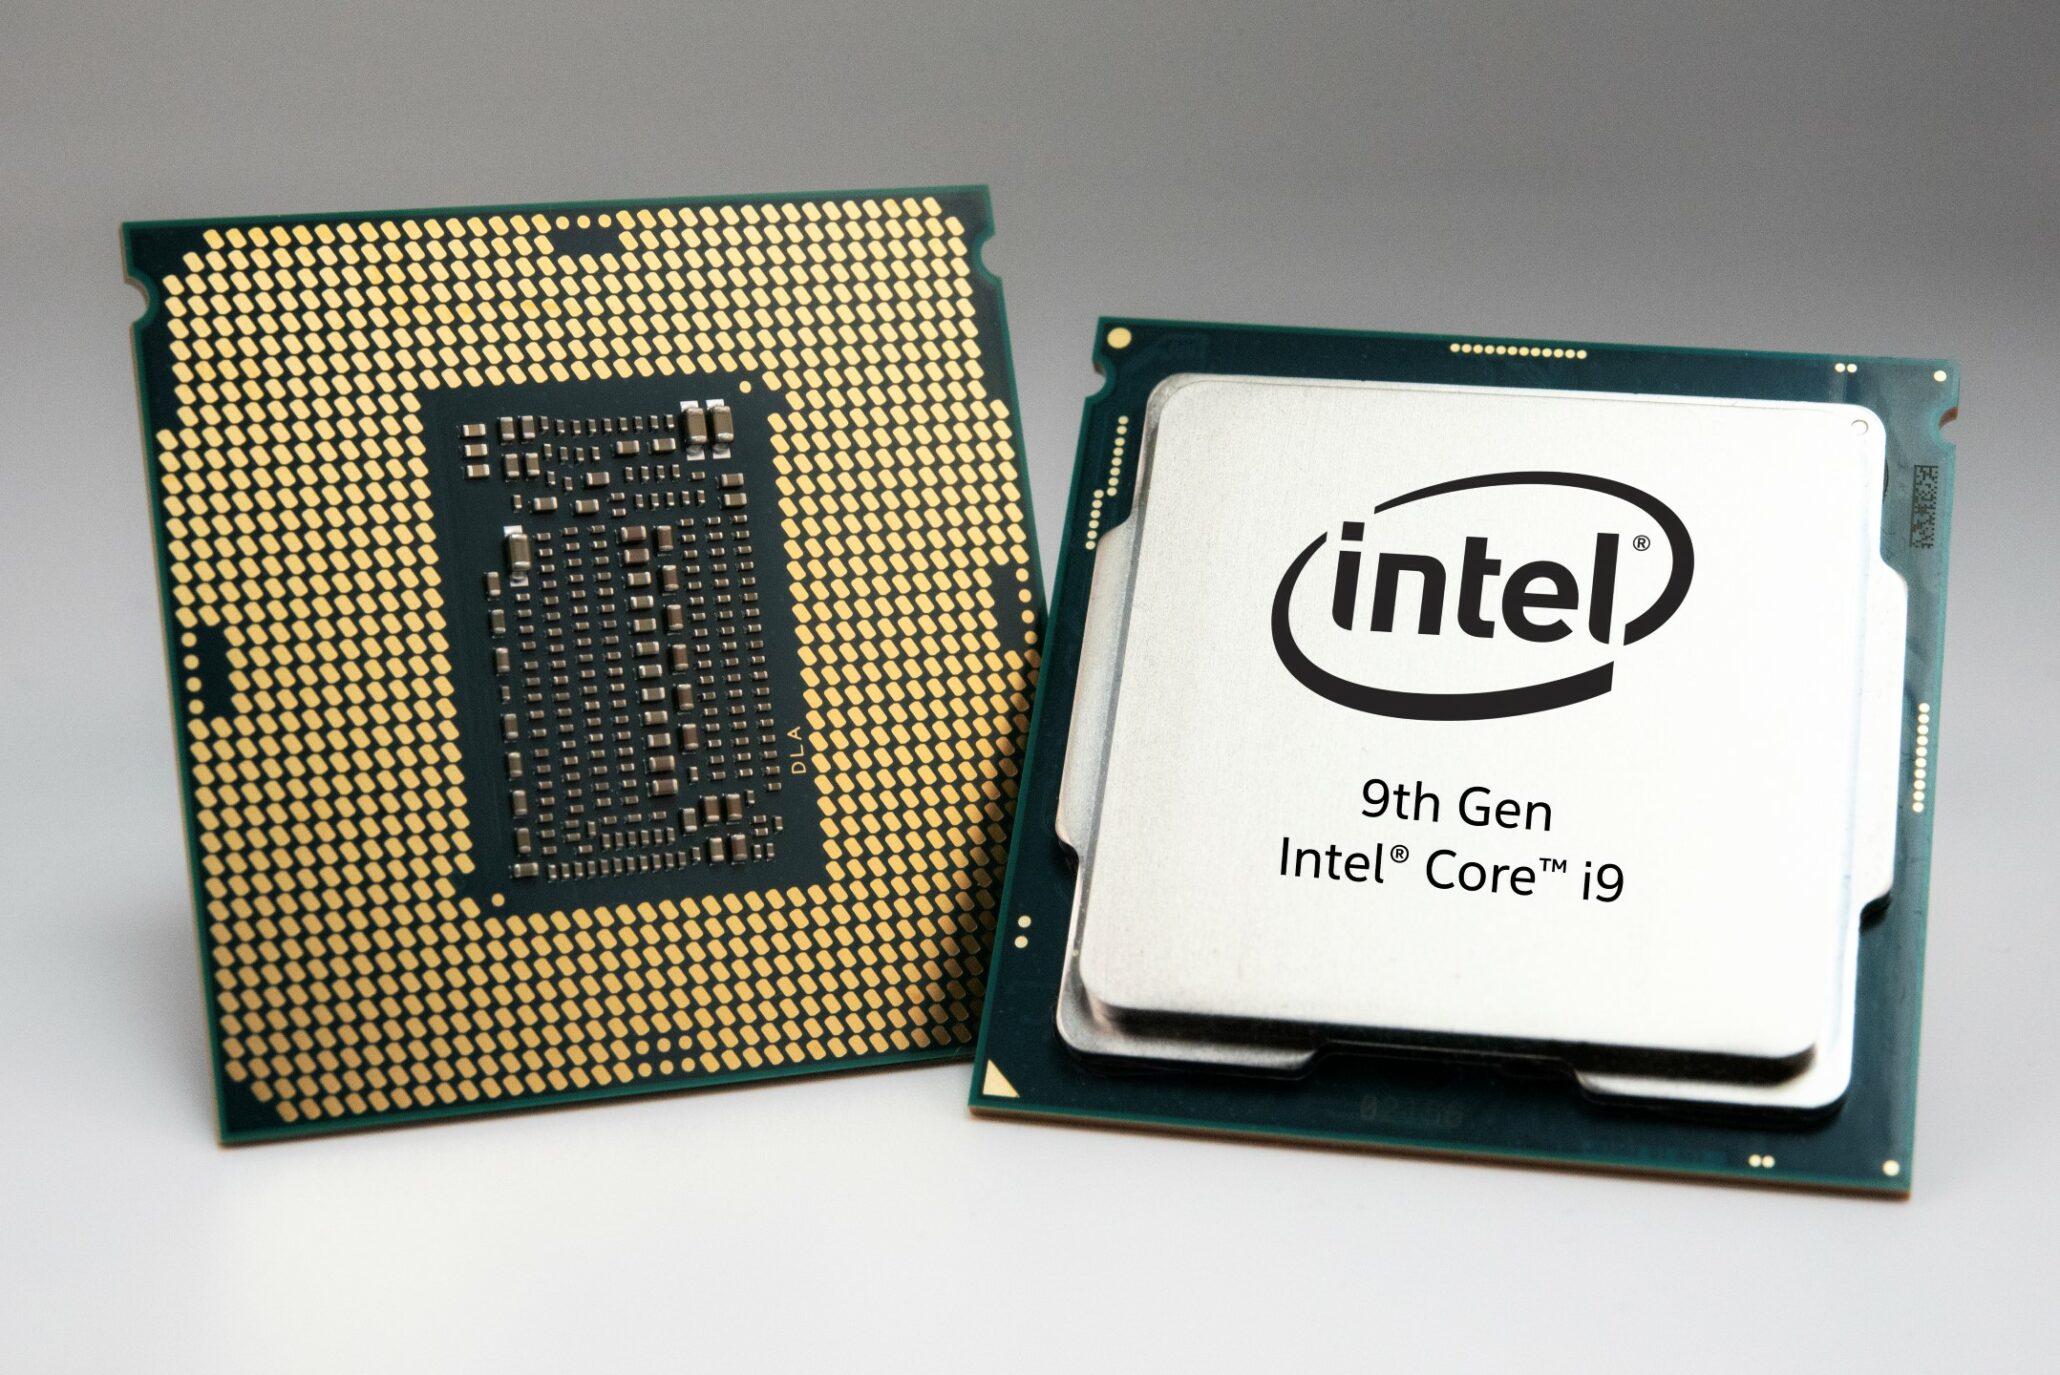 Processor from company Intel